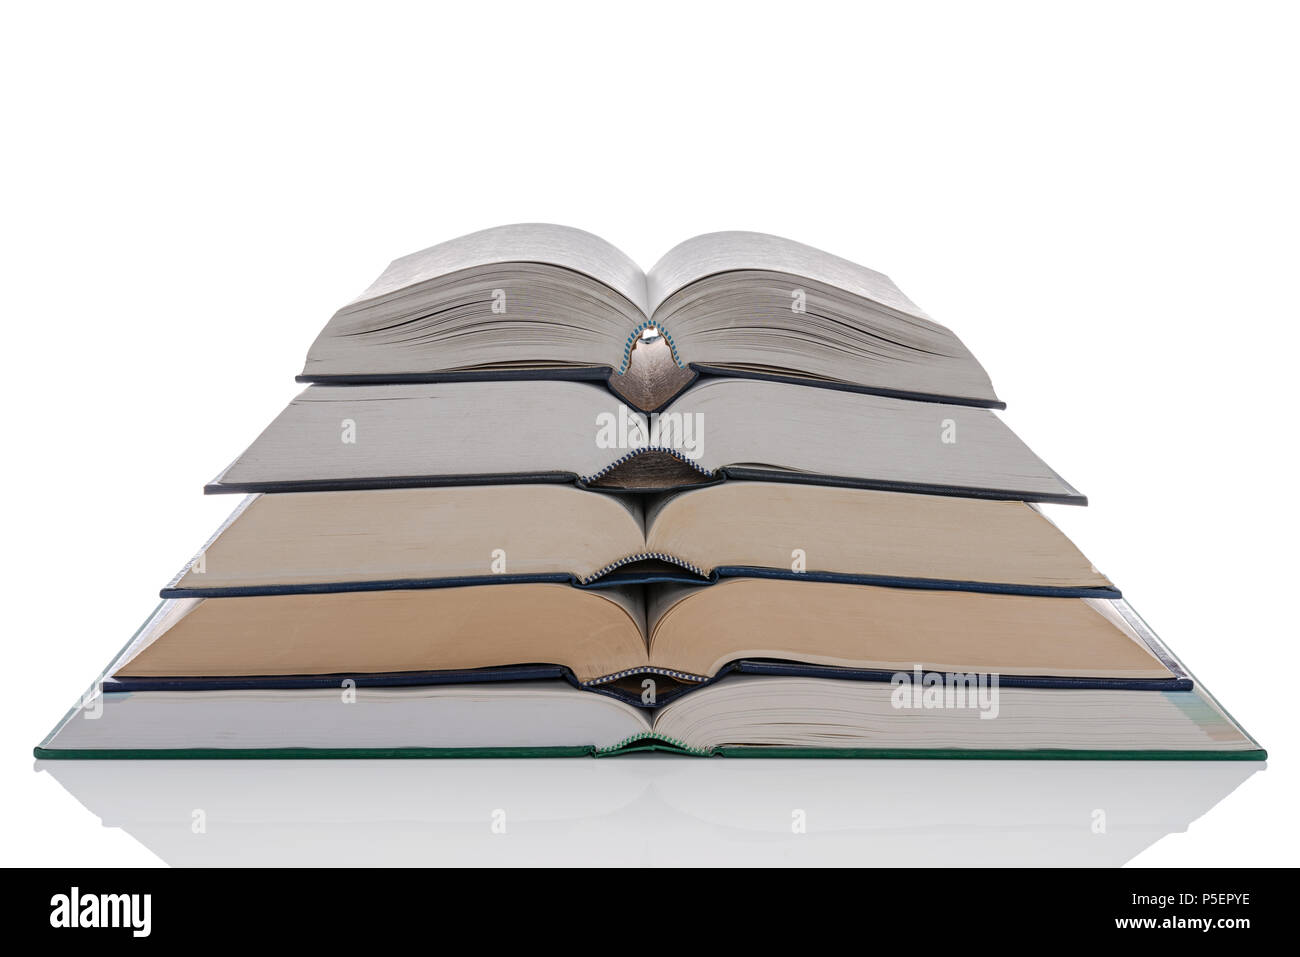 Un montón de cinco libros en tapa dura abierto aislado sobre un fondo blanco. Foto de stock